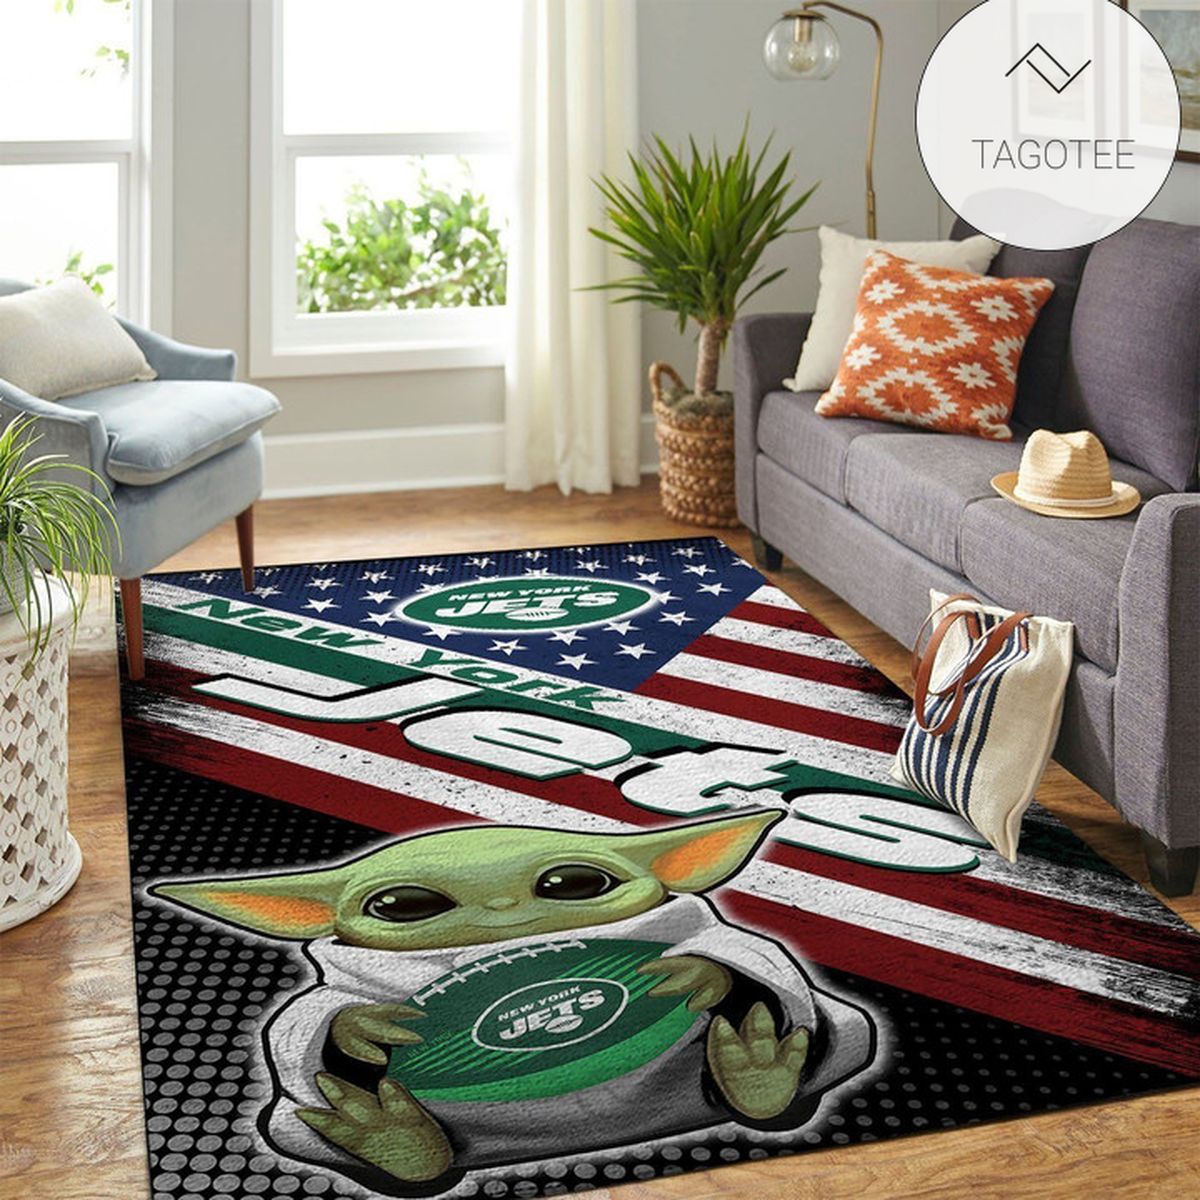 New York Jets NFL Team Logo Baby Yoda Us Style Nice Gift Home Decor Rectangle Area Rug